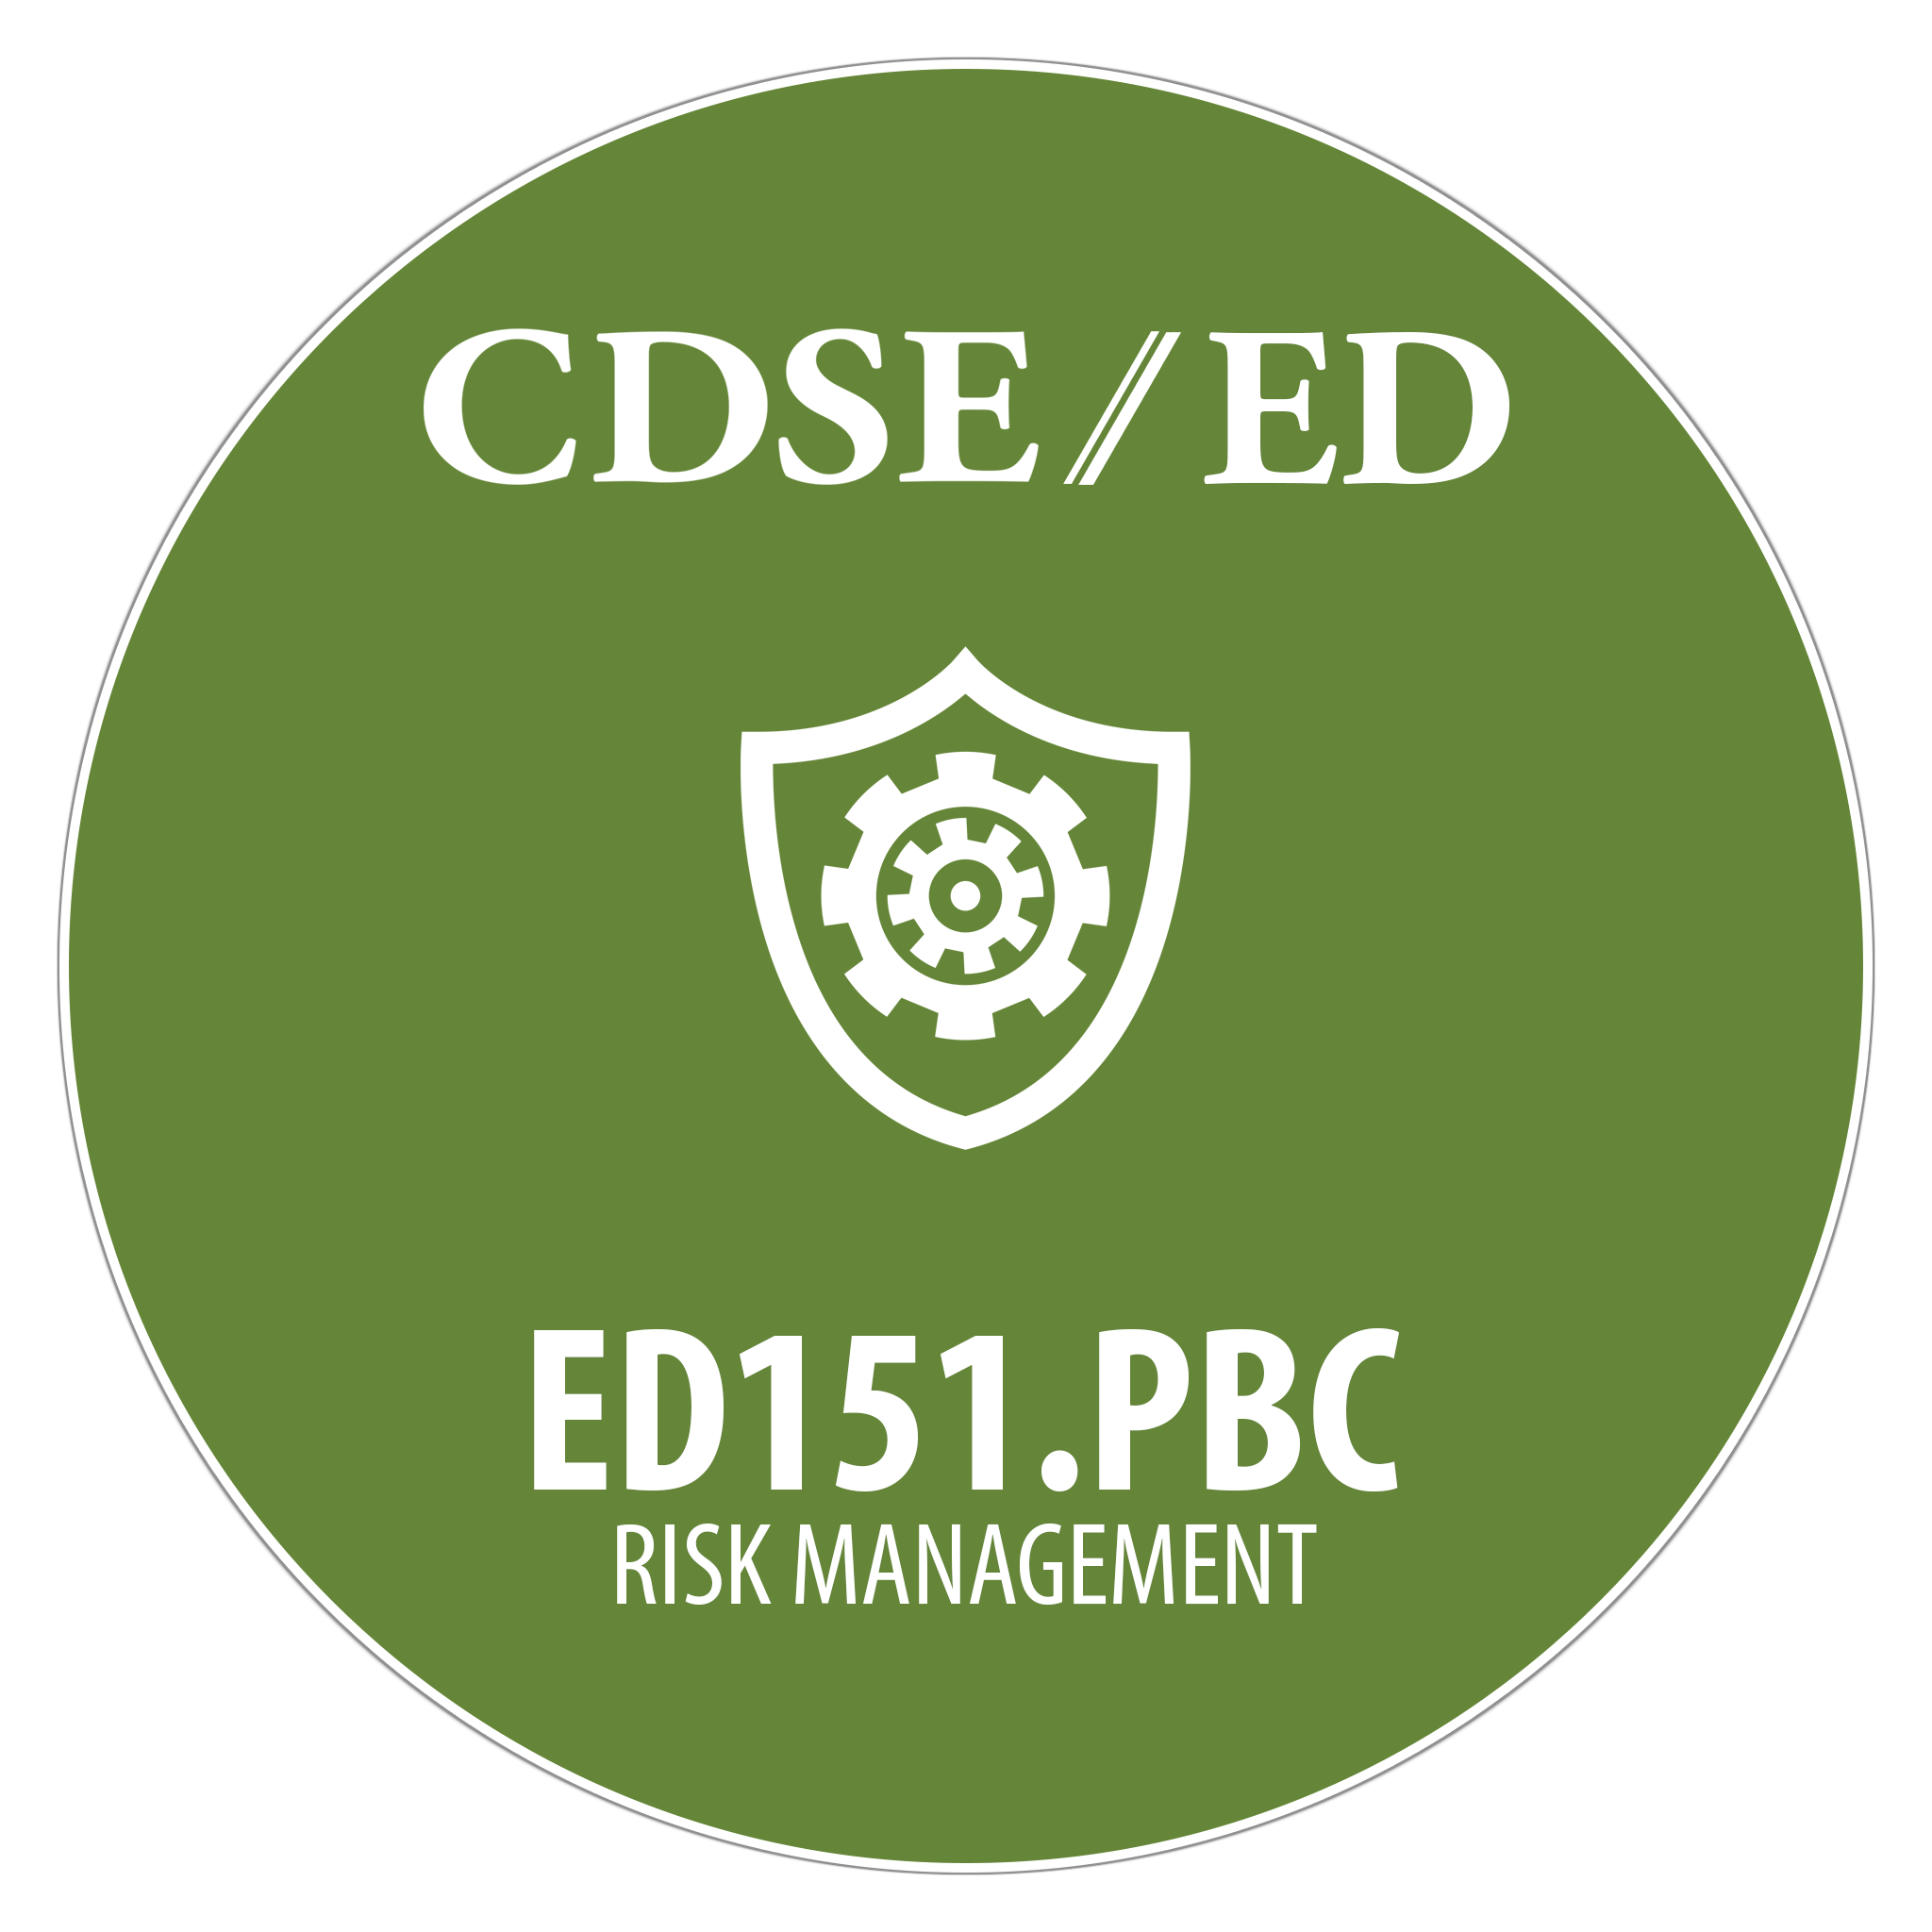 The CDSE Certificate in Risk Management Digital Badge